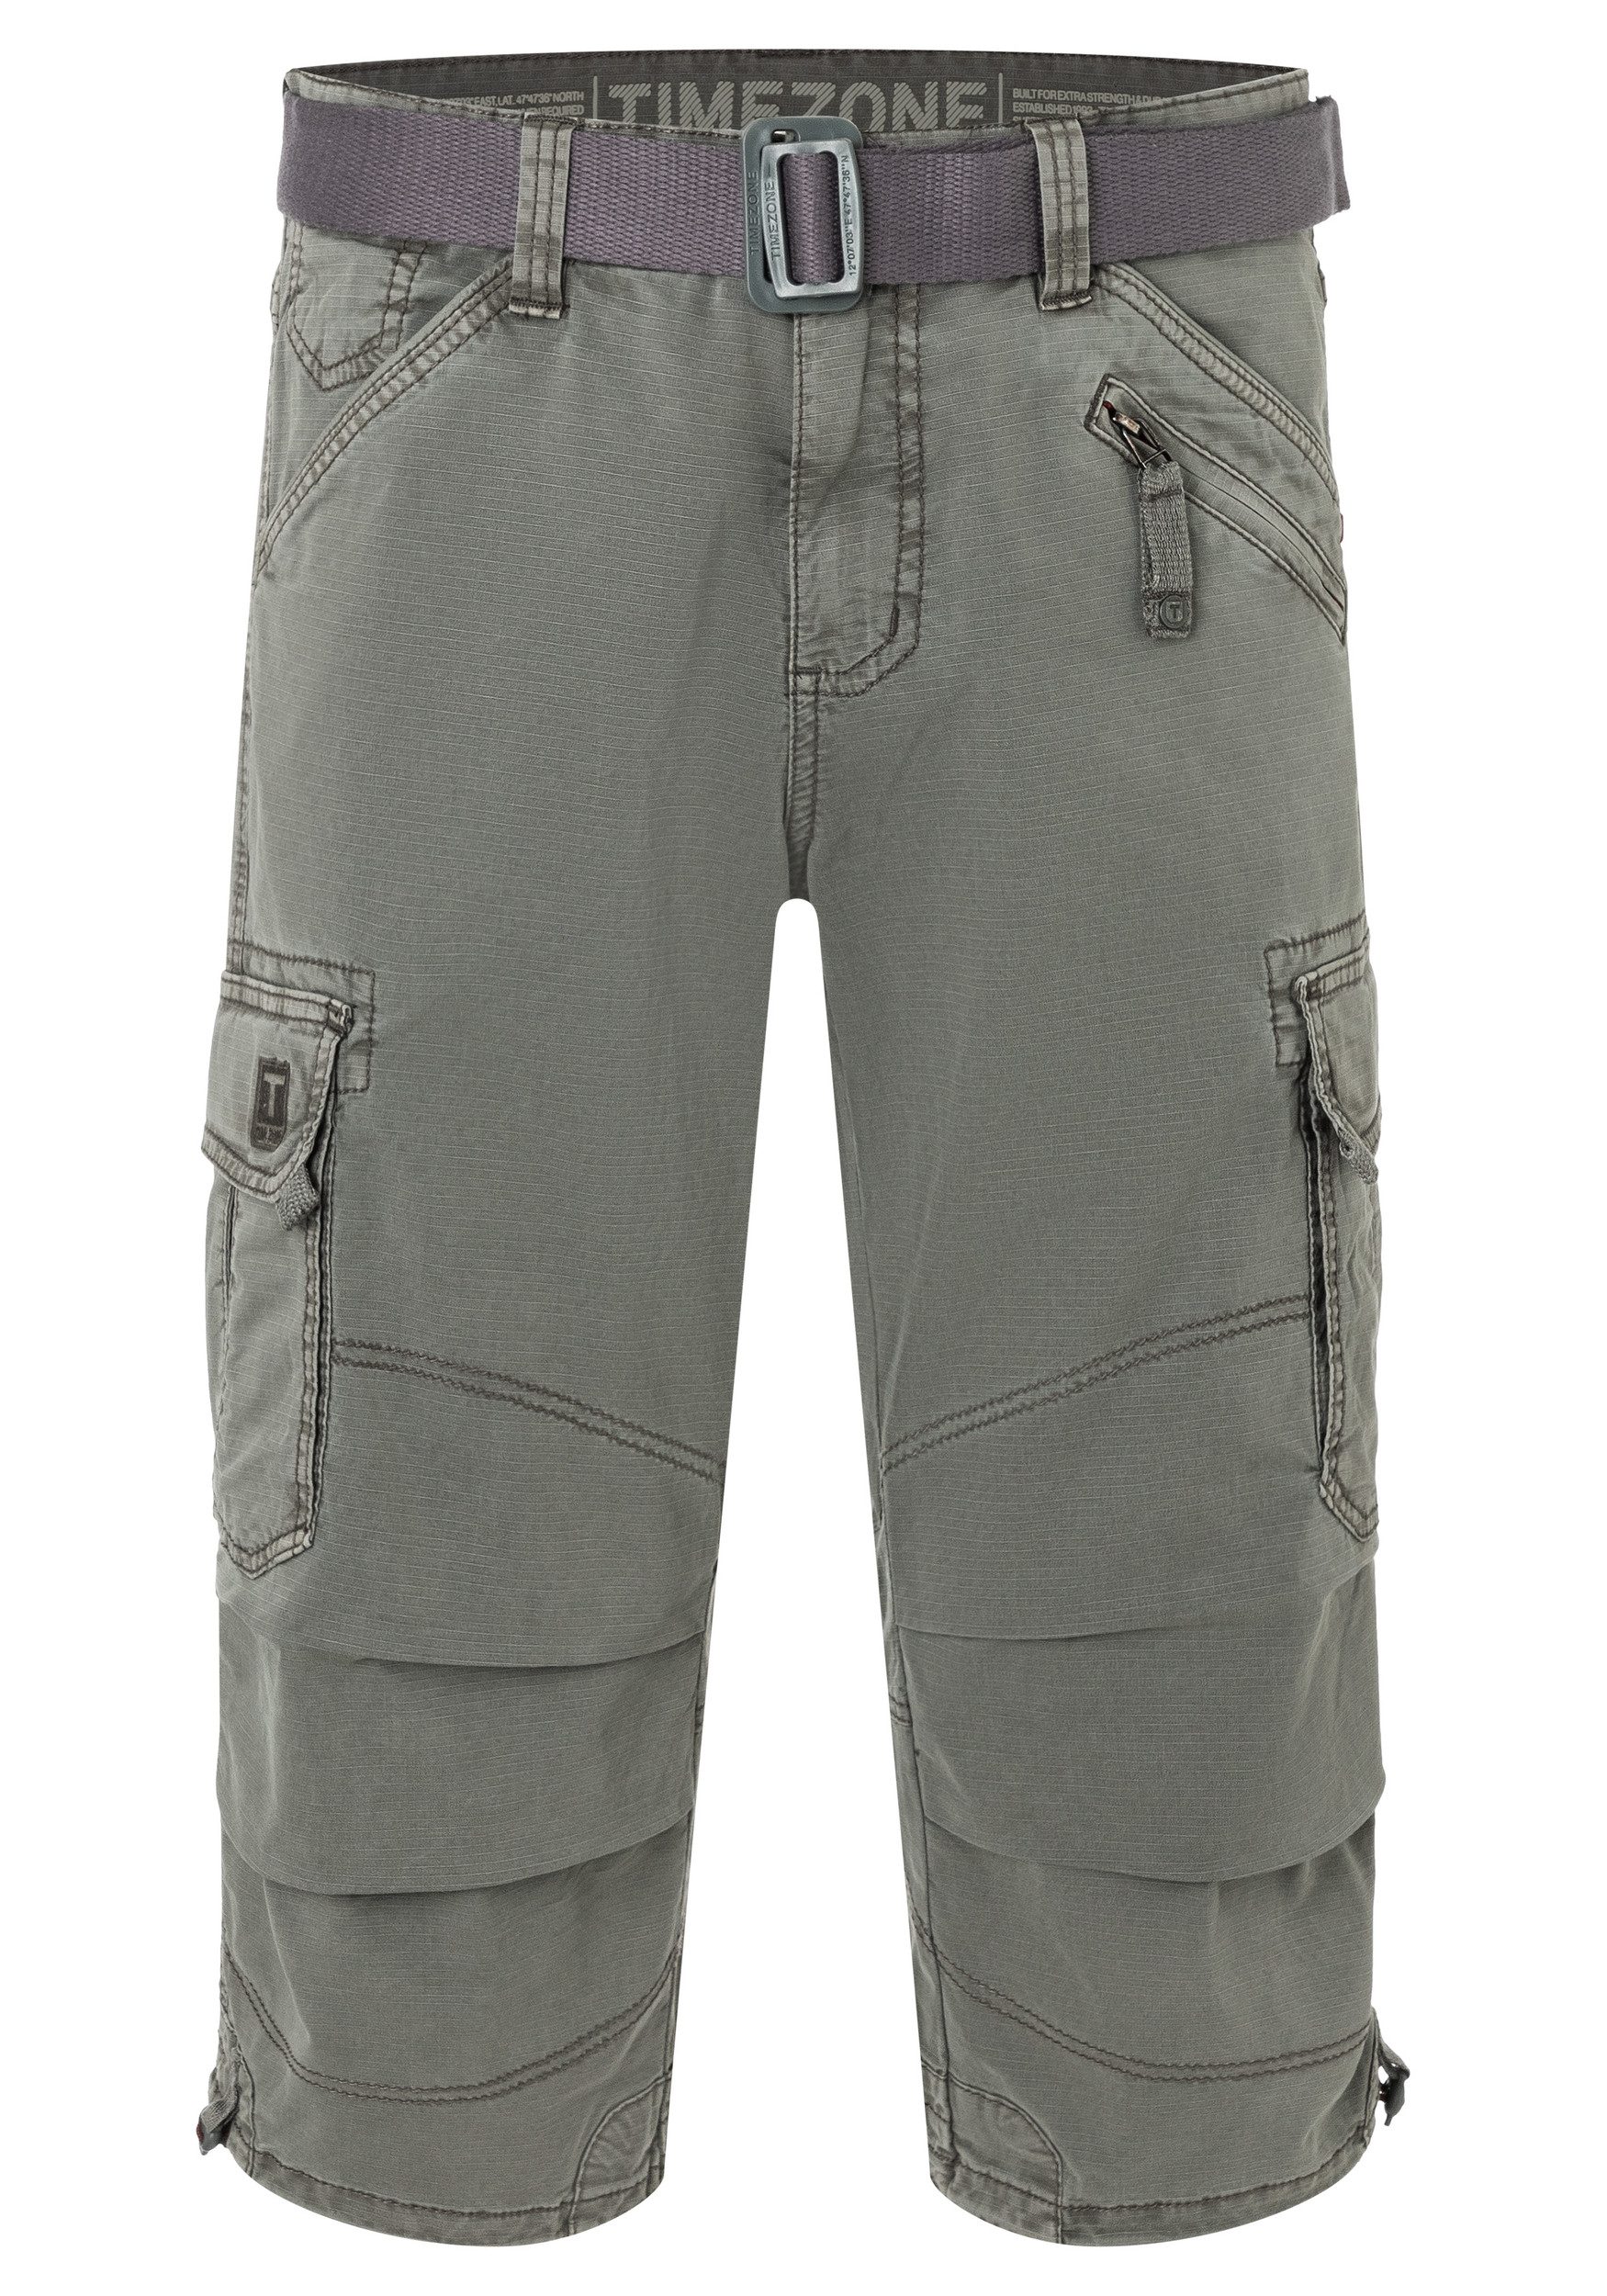 TIMEZONE Cargoshorts Shorts 3/4 Cargo Hose loose fit Mid Waist Pants 7310 in Grau